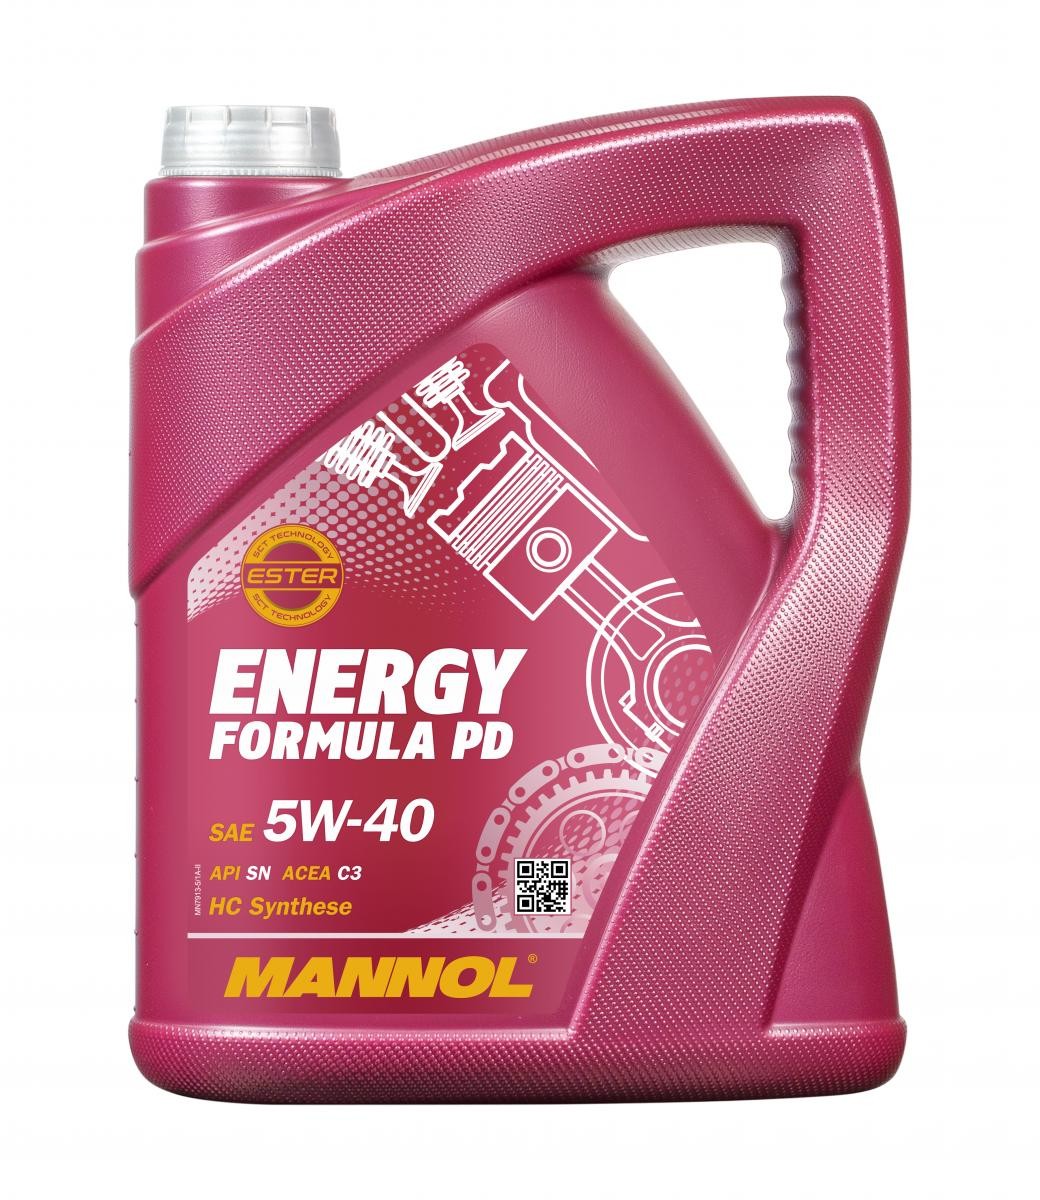 MANNOL ENERGY FORMULA PD MN7913-5 Motorolja 5W-40, 5l